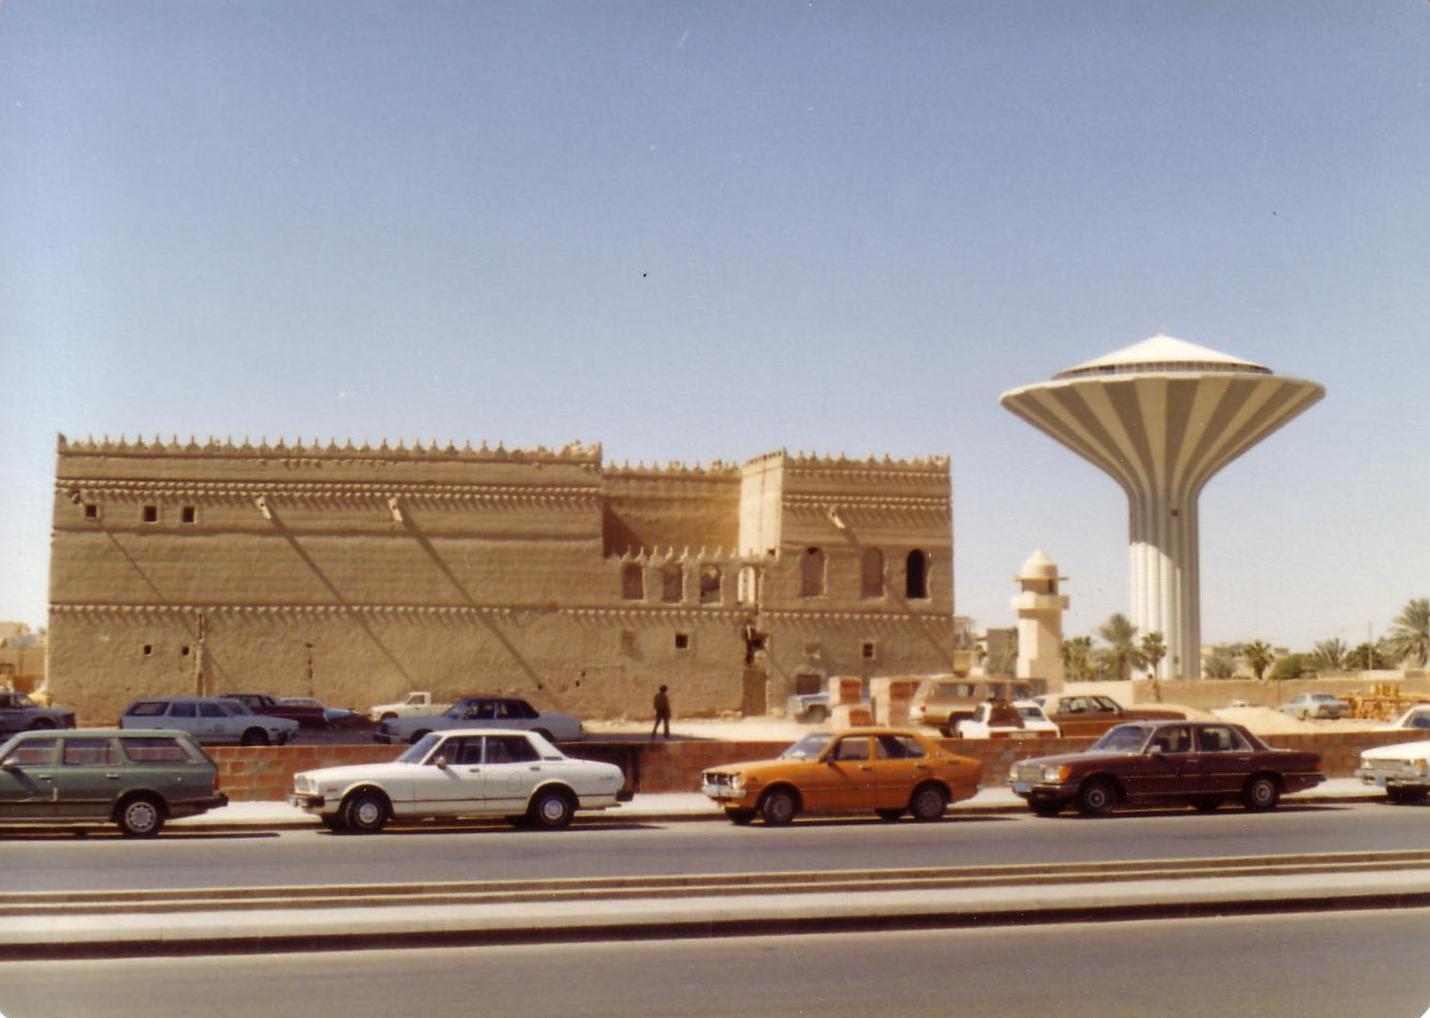 Nura Palace and Water Tower Riyadh